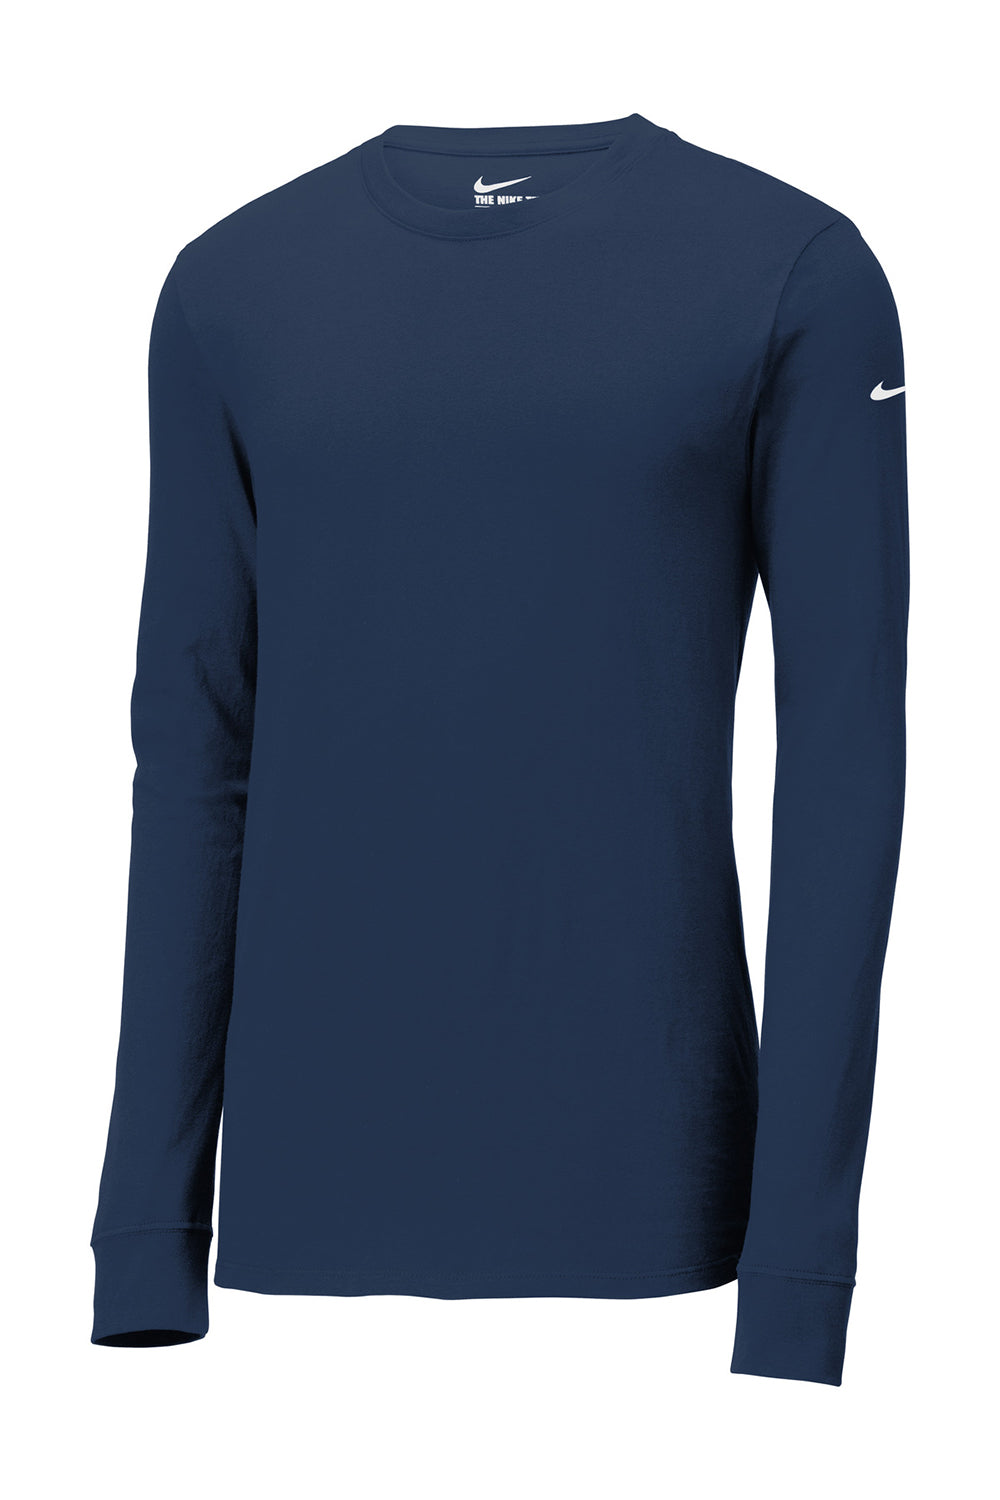 Nike NKBQ5230 Mens Dri-Fit Moisture Wicking Long Sleeve Crewneck T-Shirt College Navy Blue Flat Front